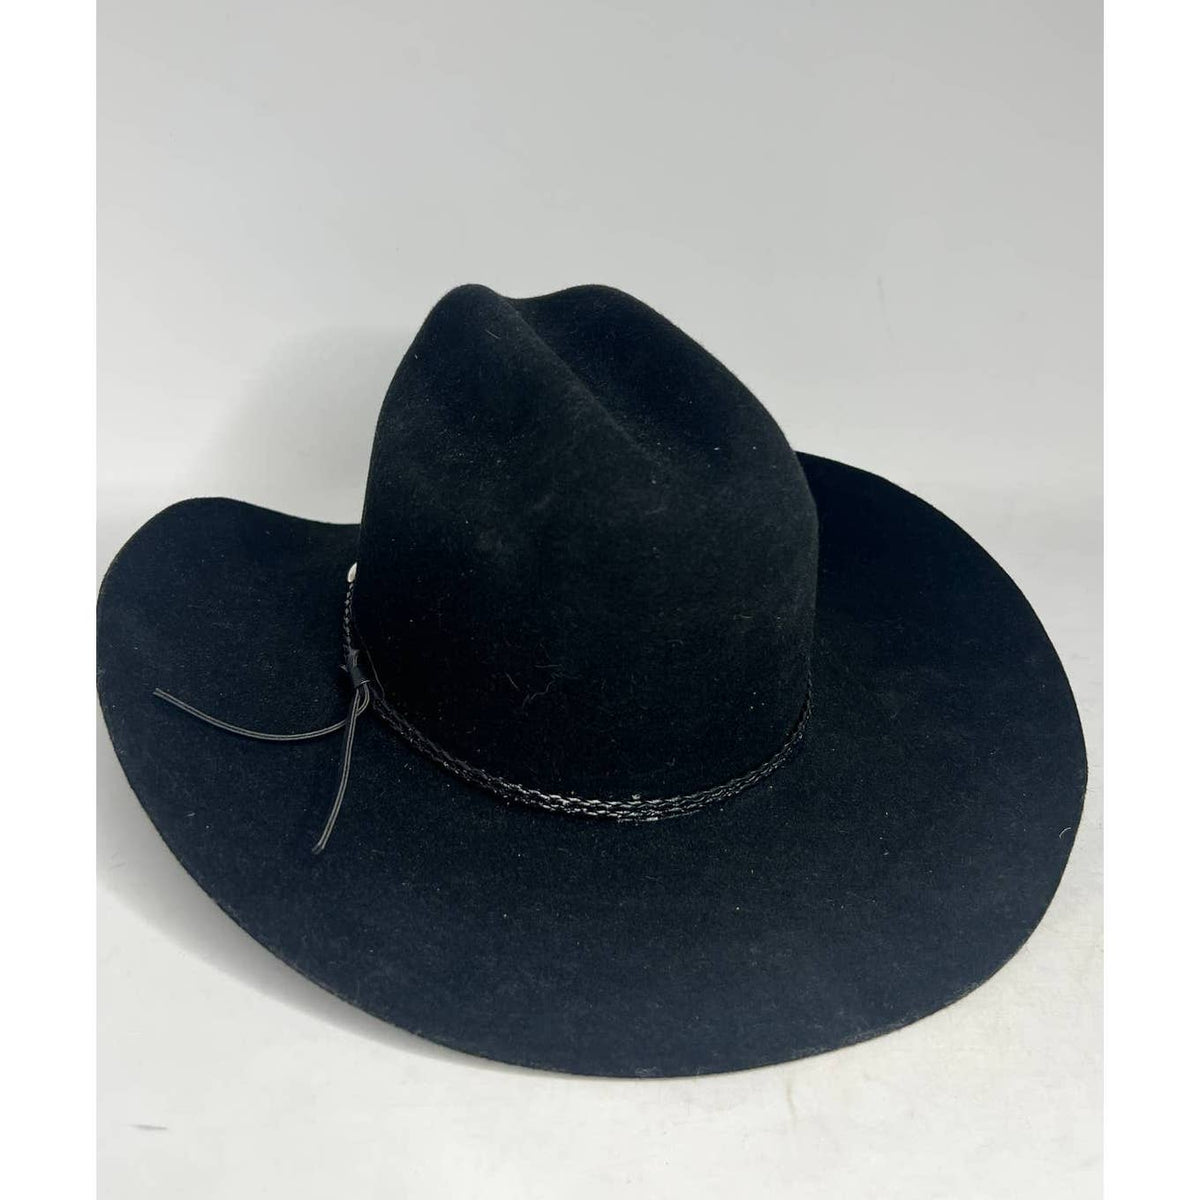 Cody James Black Cowboy Hat 3X Wool Blend 59 7 3/8